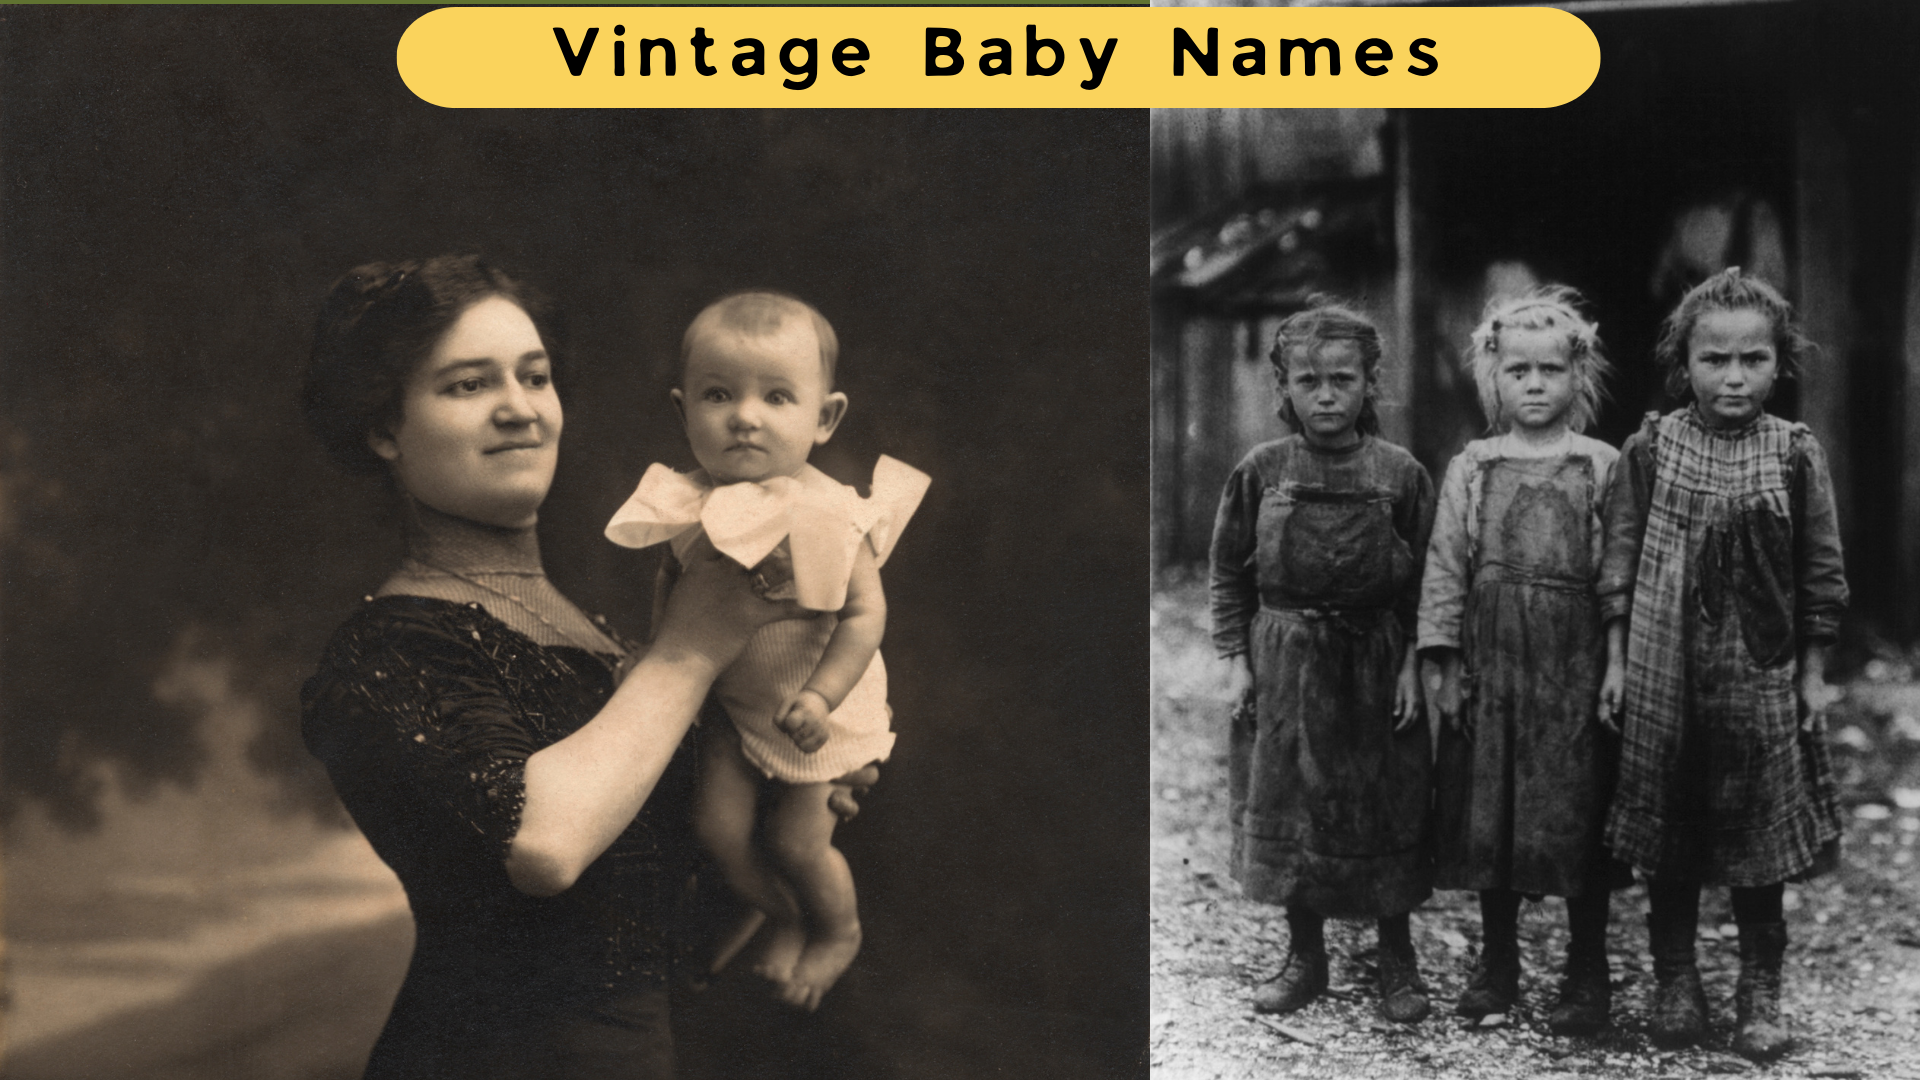 1900s Baby Names